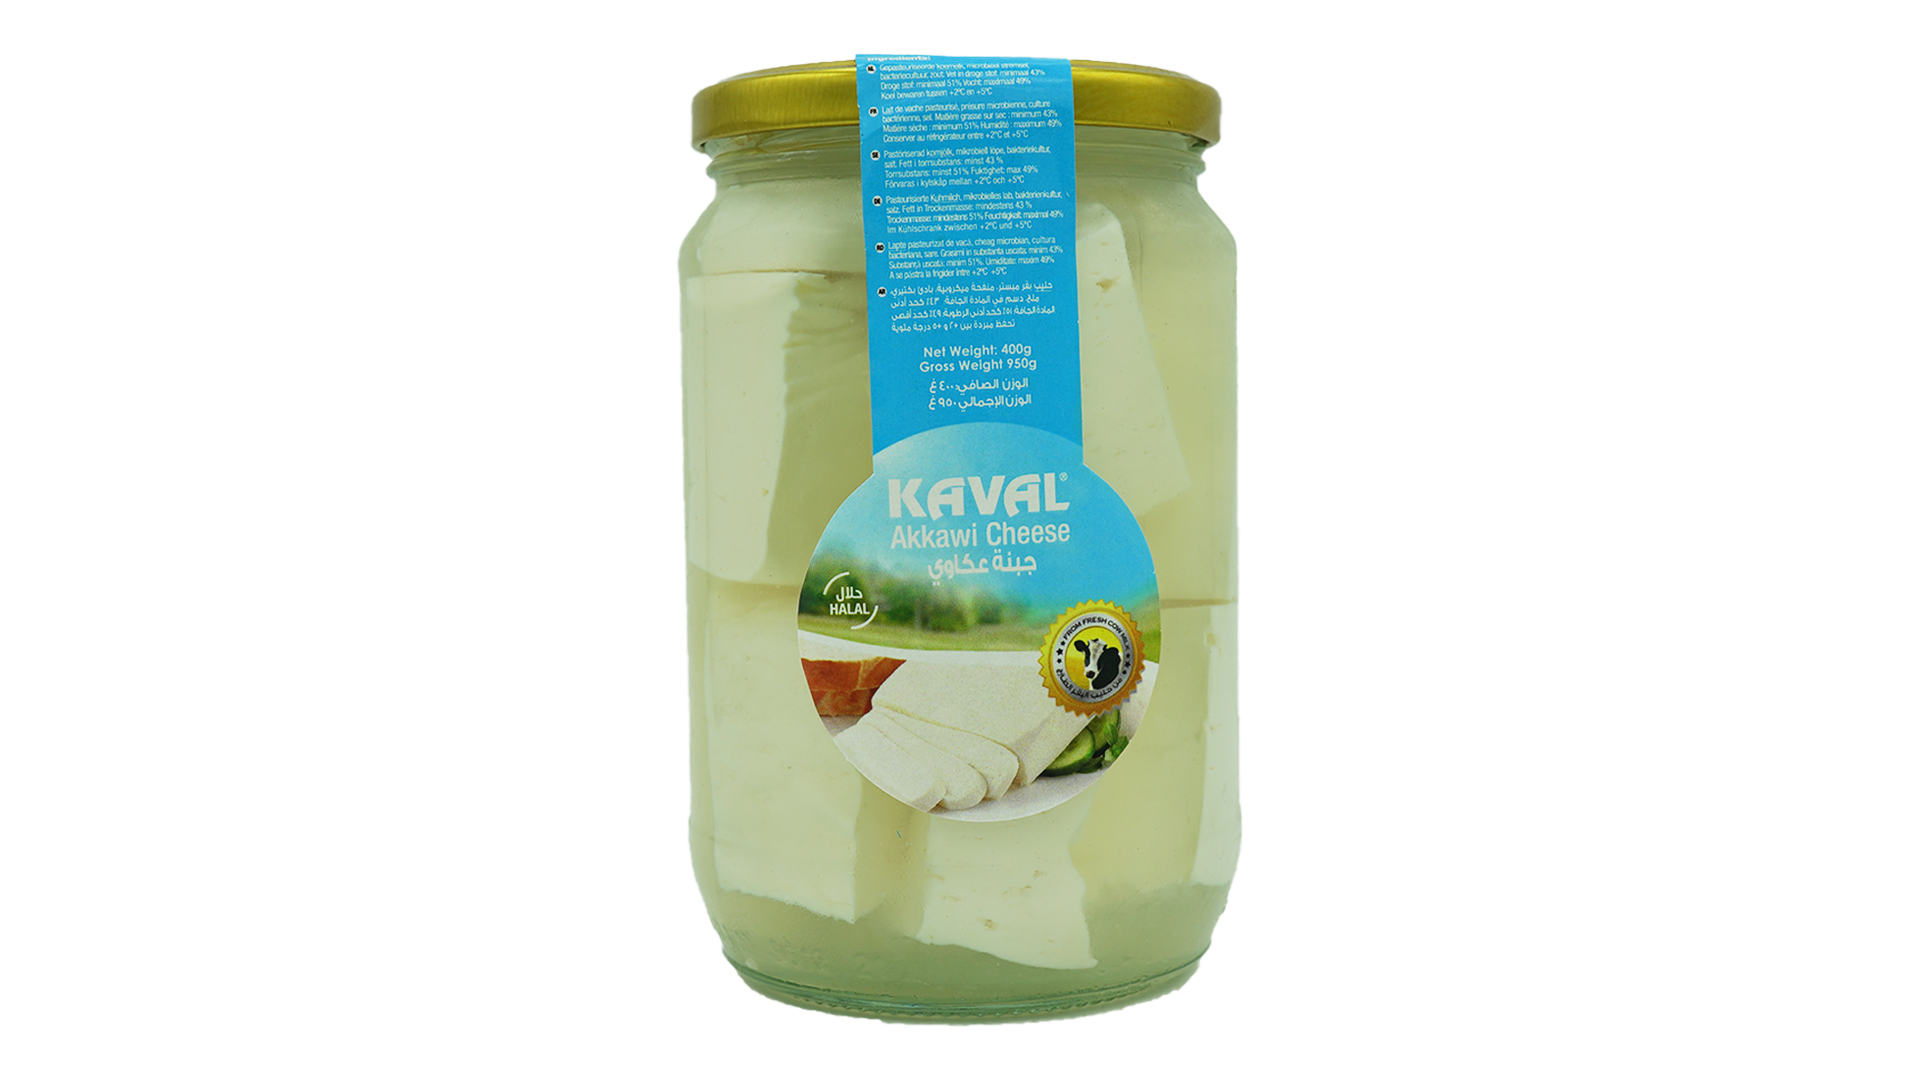 Kaval akkawi cheese 400g 2